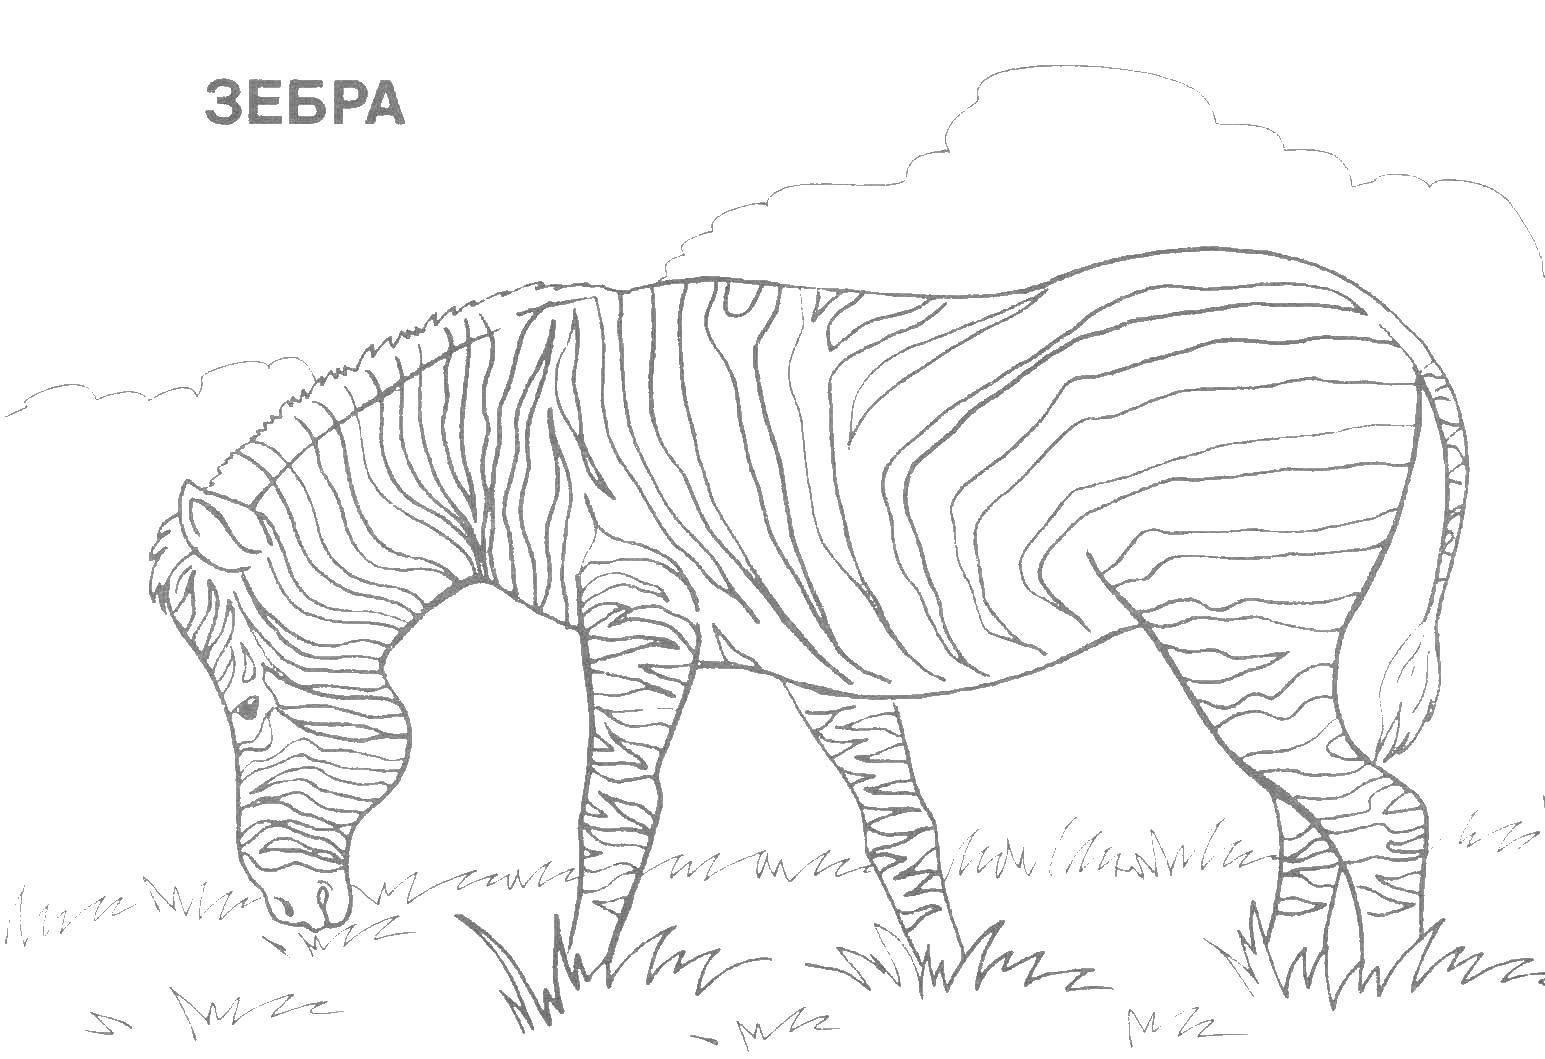 Coloring Zebra. Category Wild animals. Tags:  wild animals, zoo, Africa, Zebra.